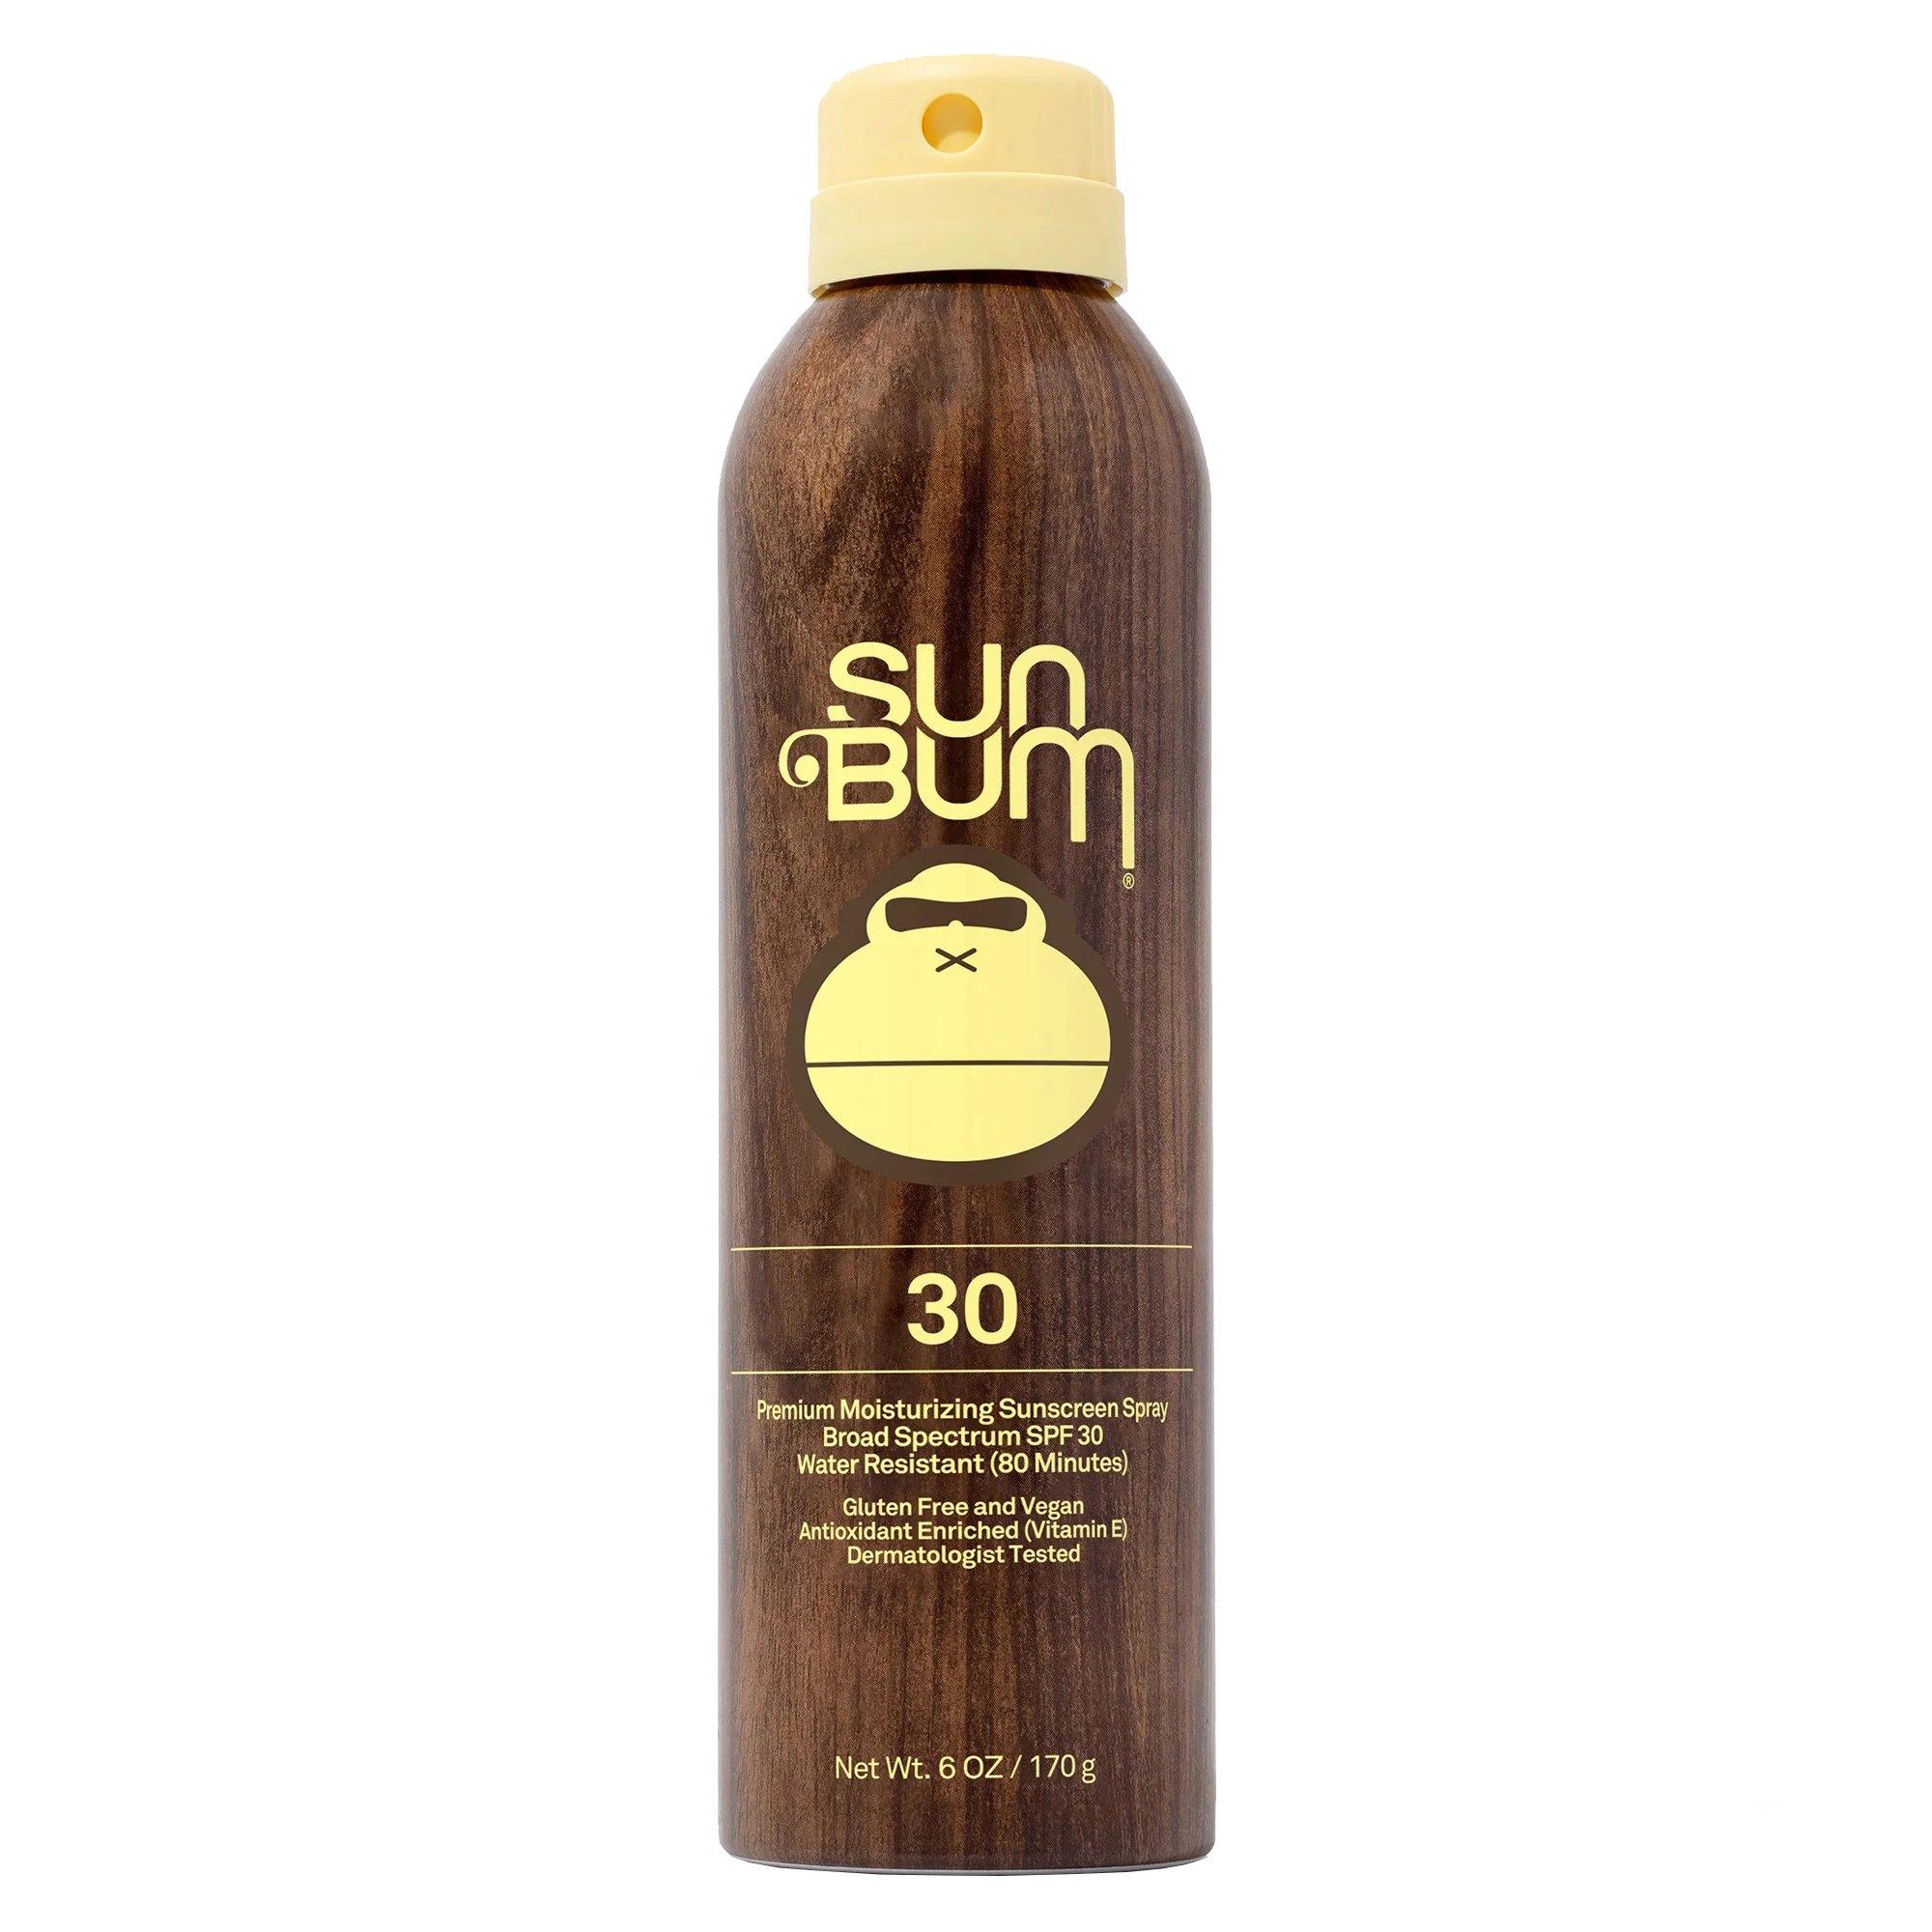 SPF 30 Premium Moisturizing Sunscreen Spray